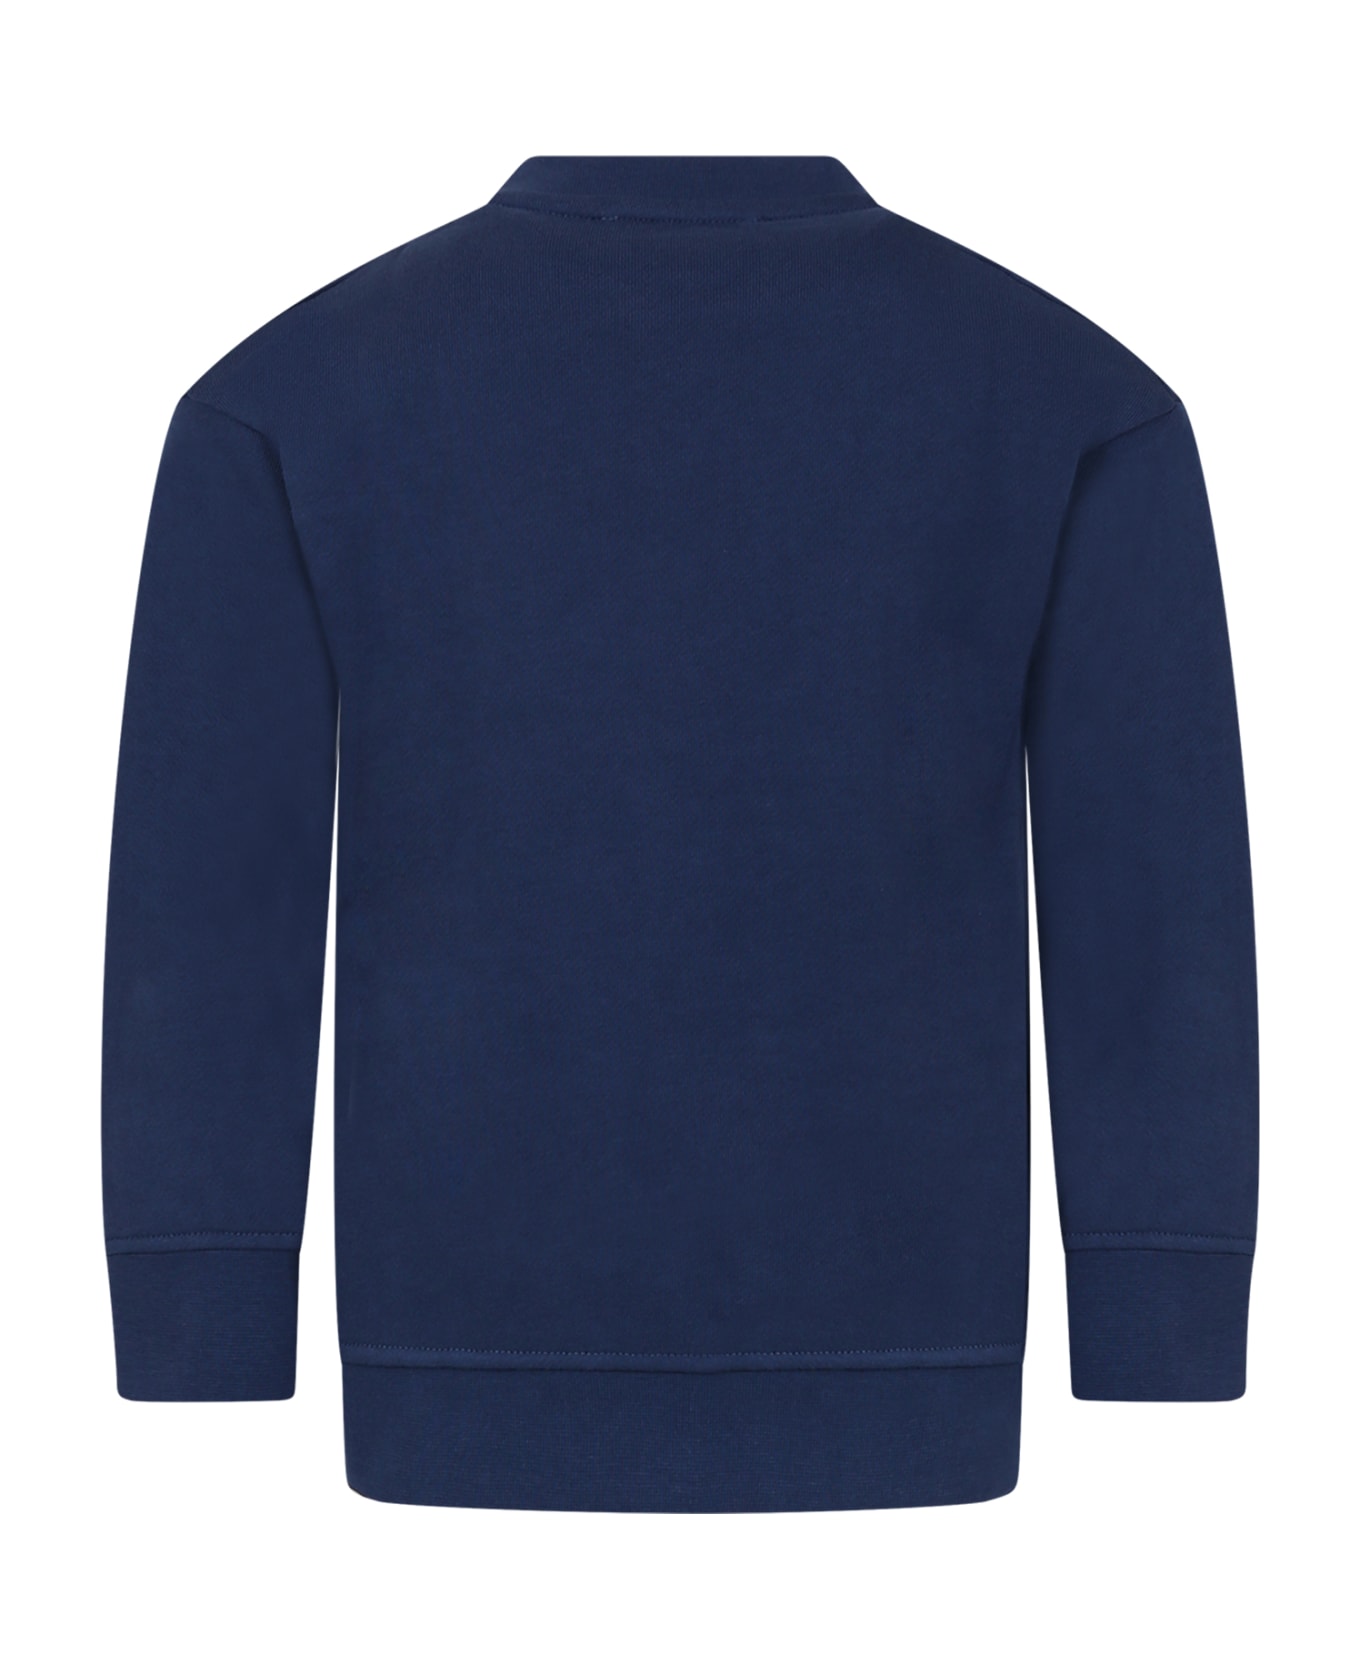 Emporio Armani Blue Sweatshirt For Boy With Eaglet And Logo - Blue